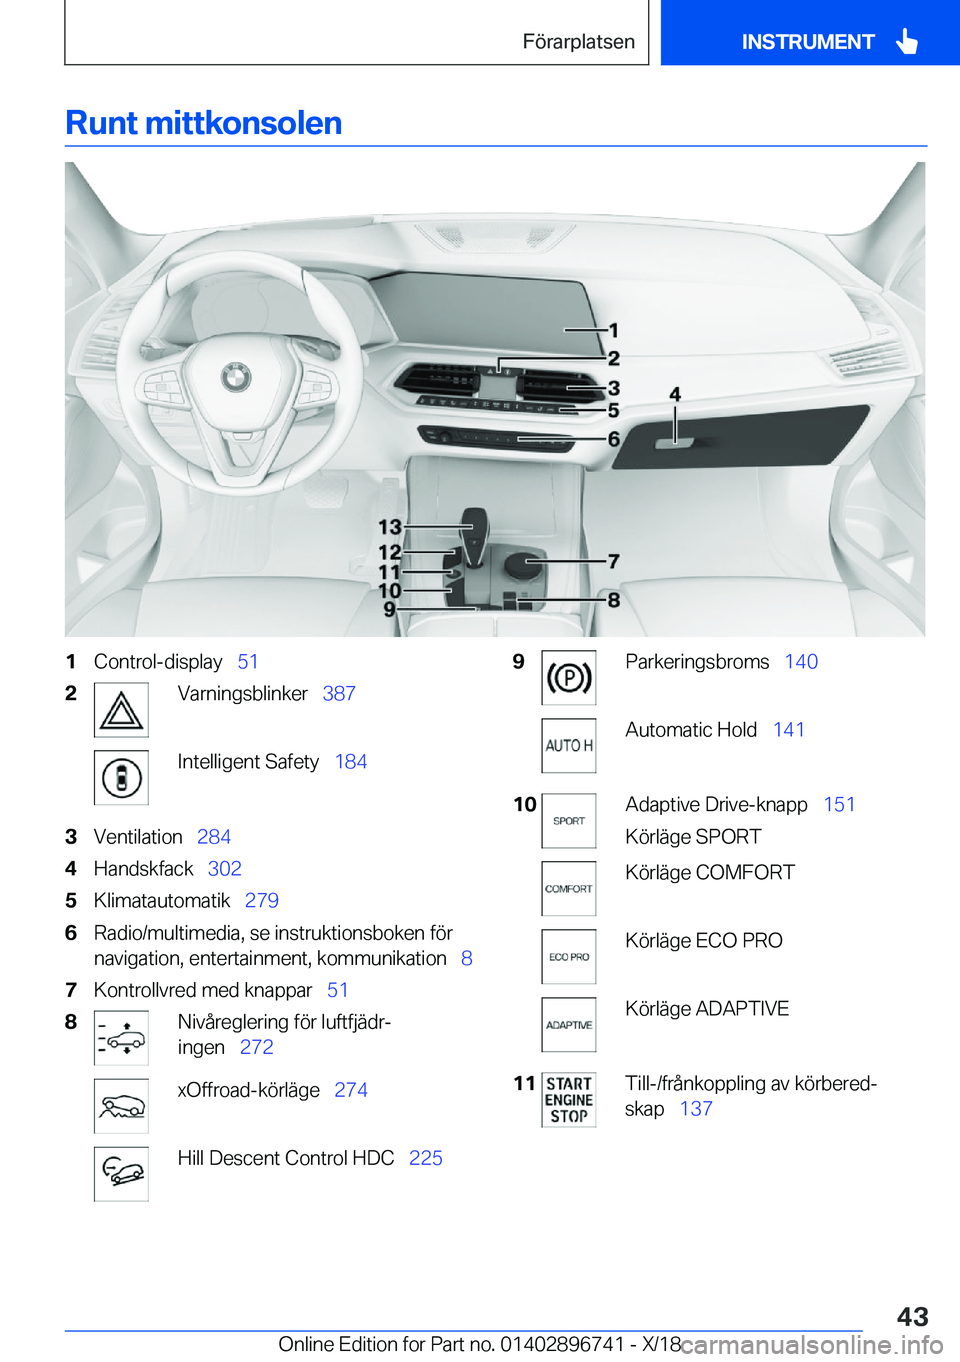 BMW X5 2019  InstruktionsbÖcker (in Swedish) �R�u�n�t��m�i�t�t�k�o�n�s�o�l�e�n�1�C�o�n�t�r�o�l�-�d�i�s�p�l�a�y\_�5�1�2�V�a�r�n�i�n�g�s�b�l�i�n�k�e�r\_ �3�8�7�I�n�t�e�l�l�i�g�e�n�t��S�a�f�e�t�y\_ �1�8�4�3�V�e�n�t�i�l�a�t�i�o�n\_�2�8�4�4